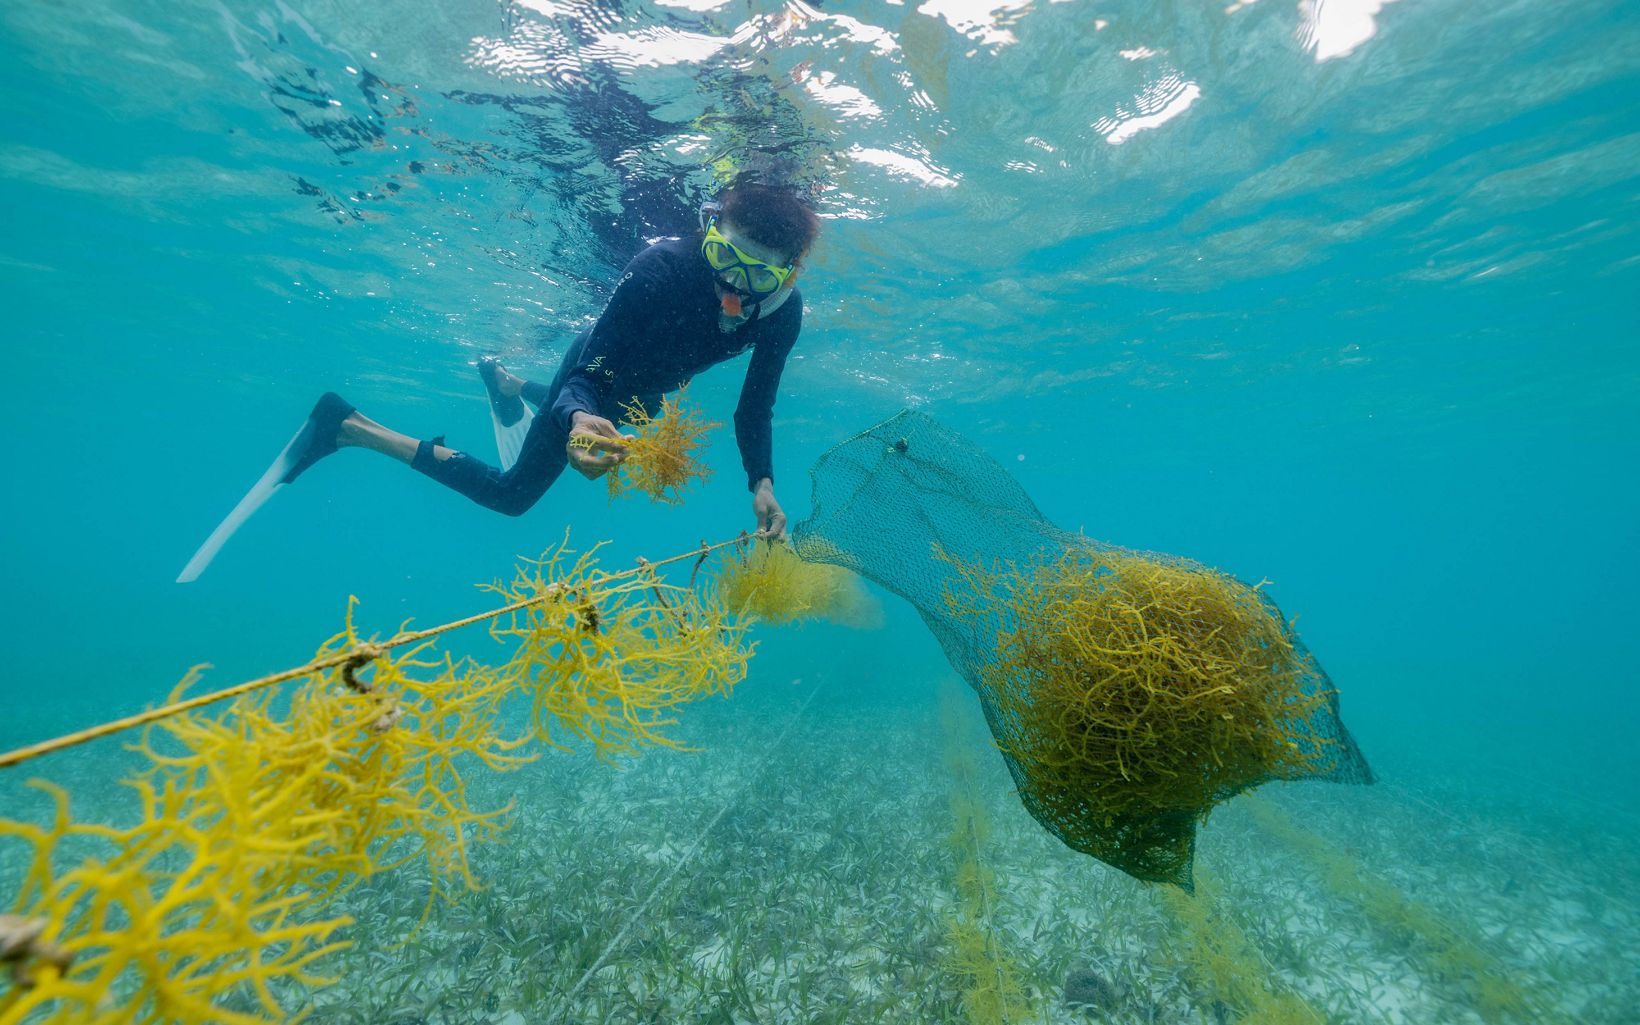 Mariko Wallen dives with seaweed in a net.